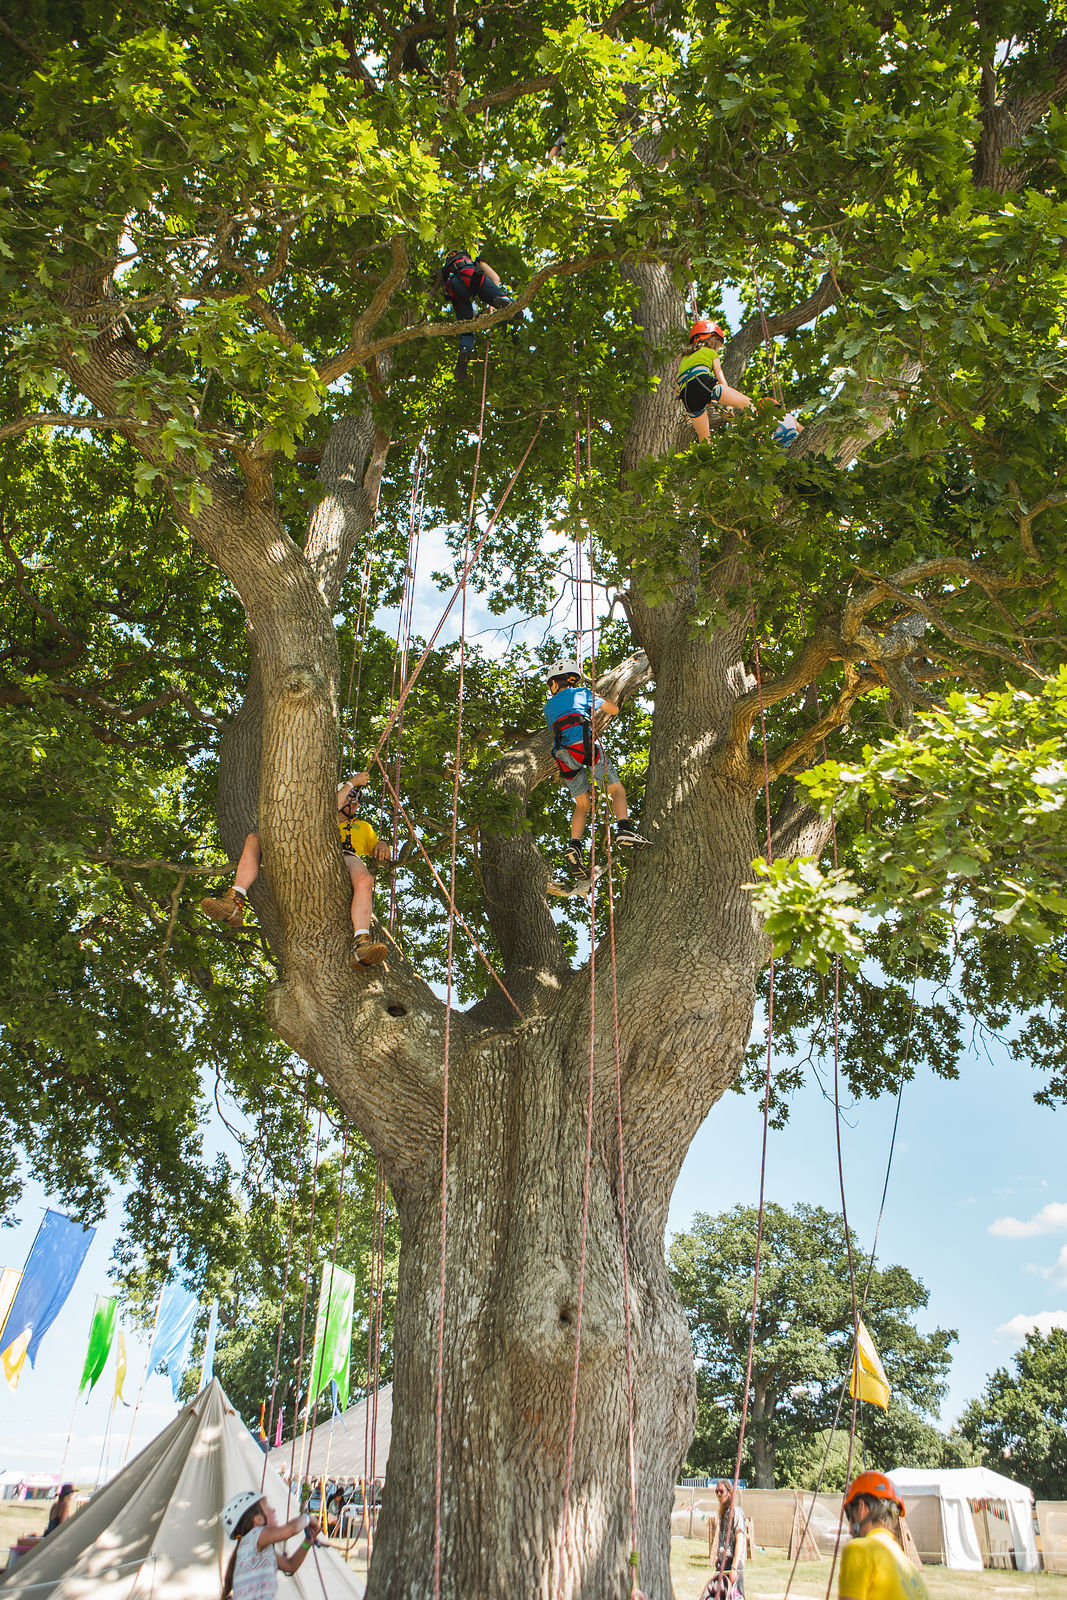 Tree Climbing